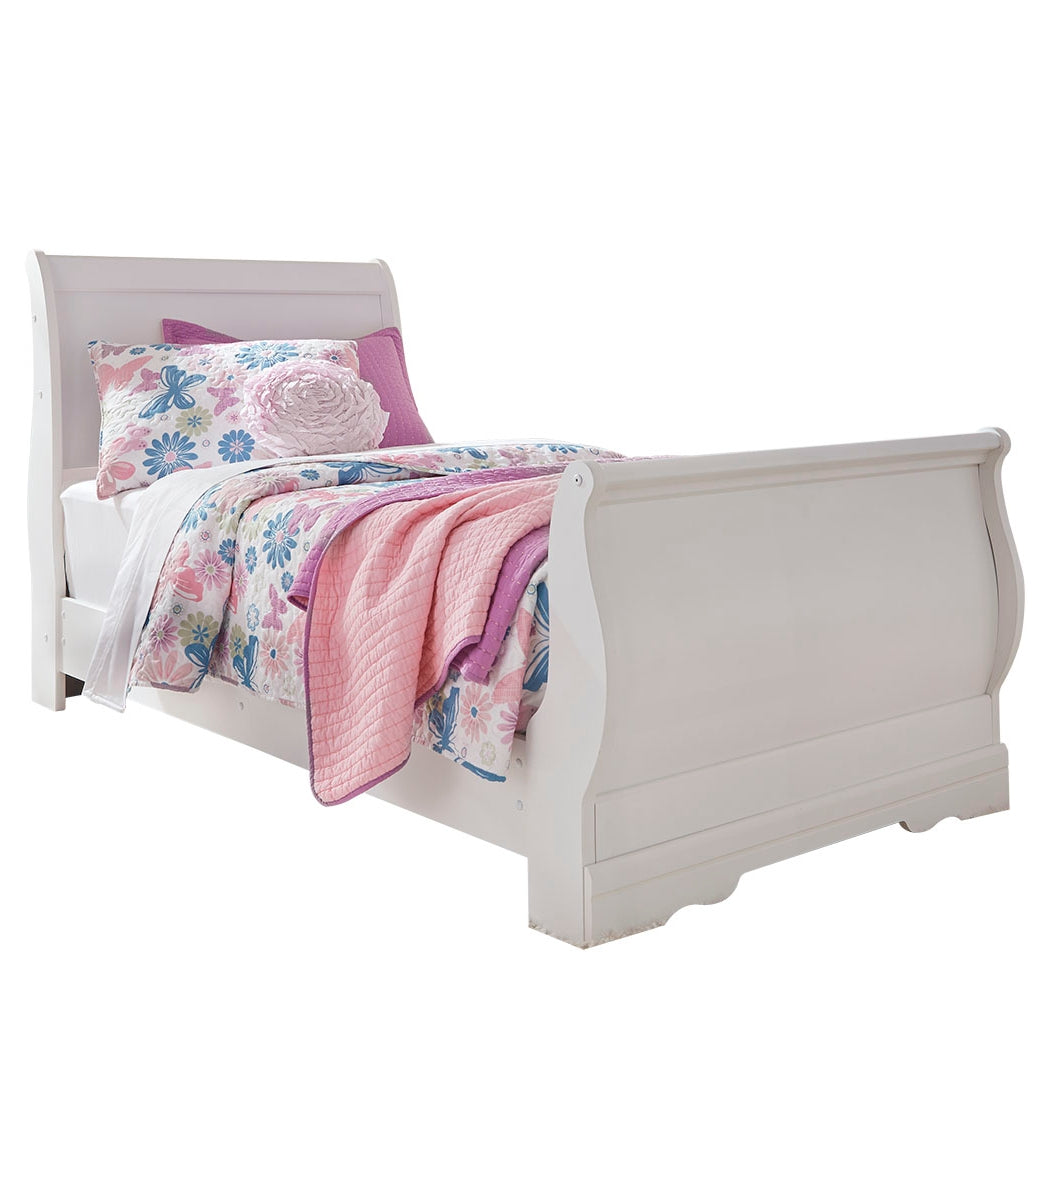 Anarasia Twin Sleigh Bed with Dresser